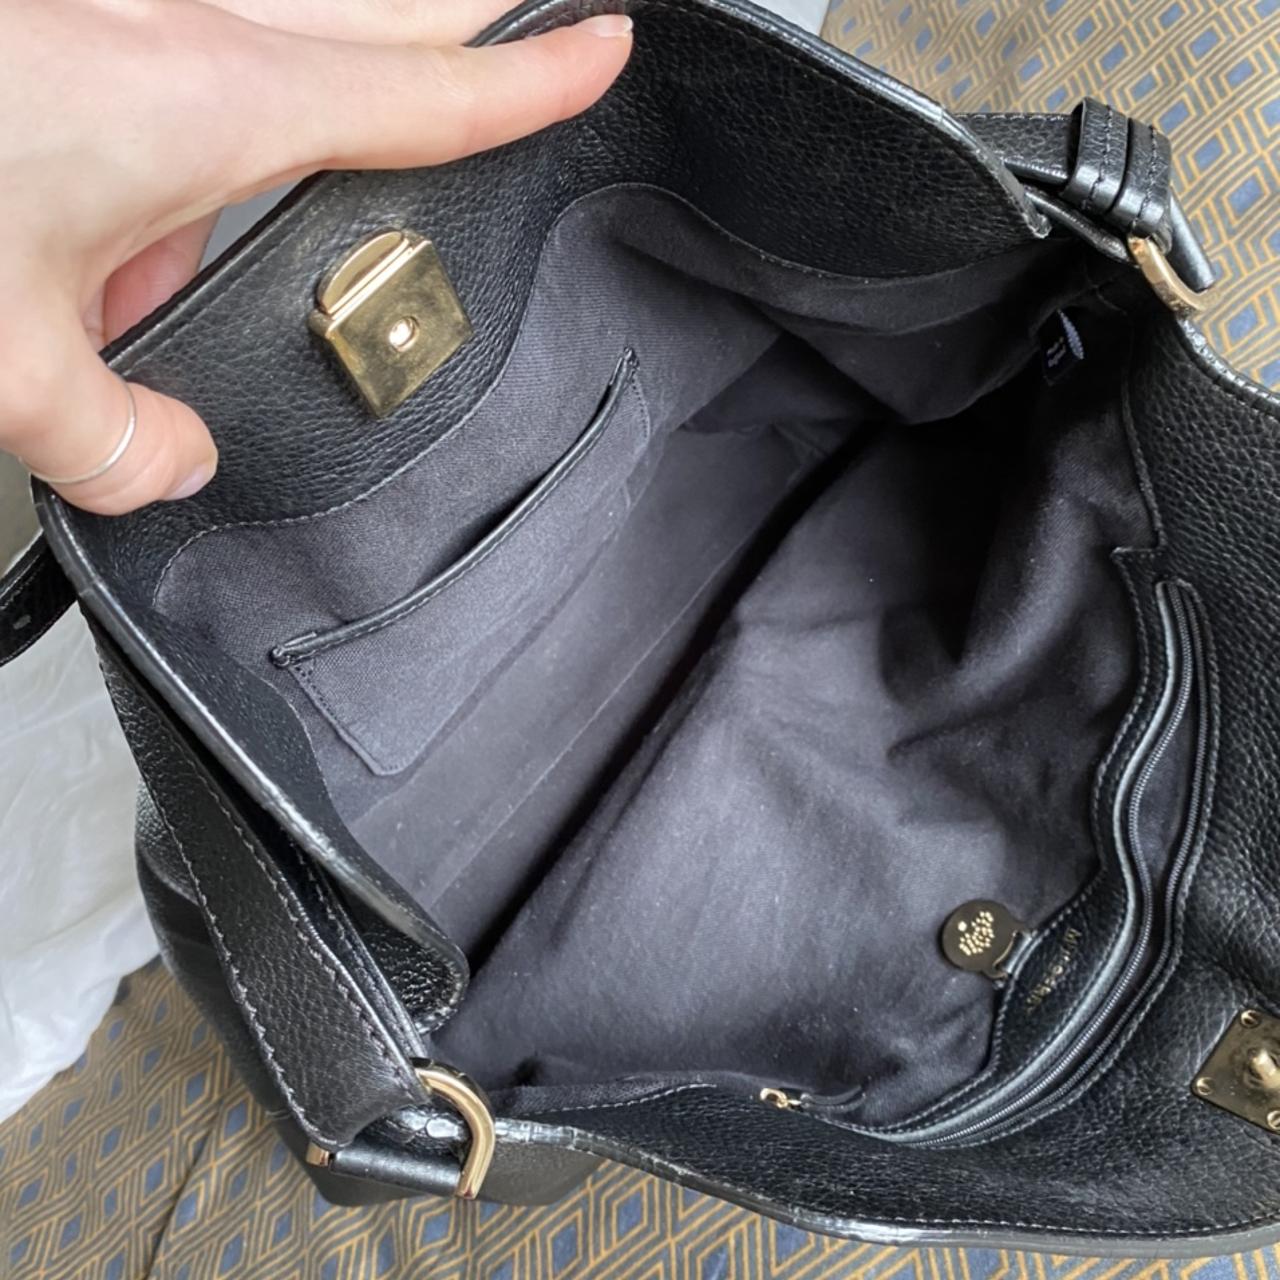 Handmade oversized damask zipper cosmetic bag. Can - Depop